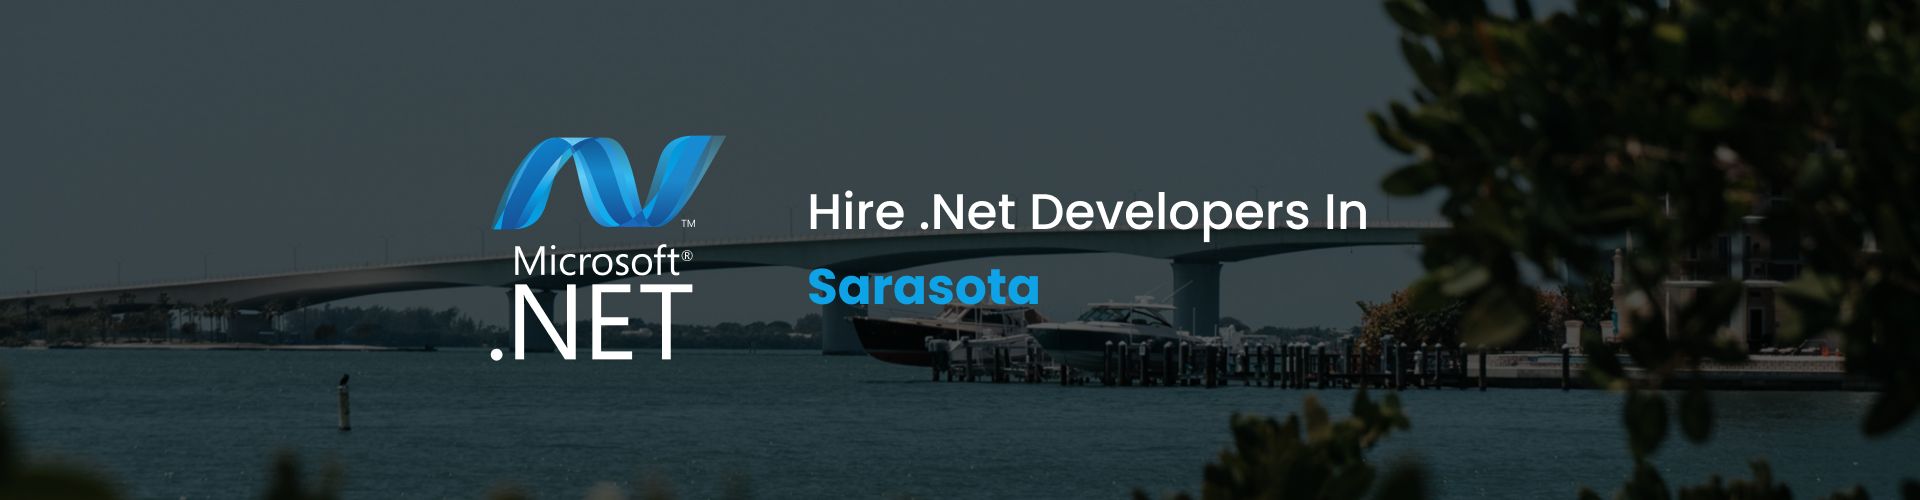 hire dot net developers in sarasota